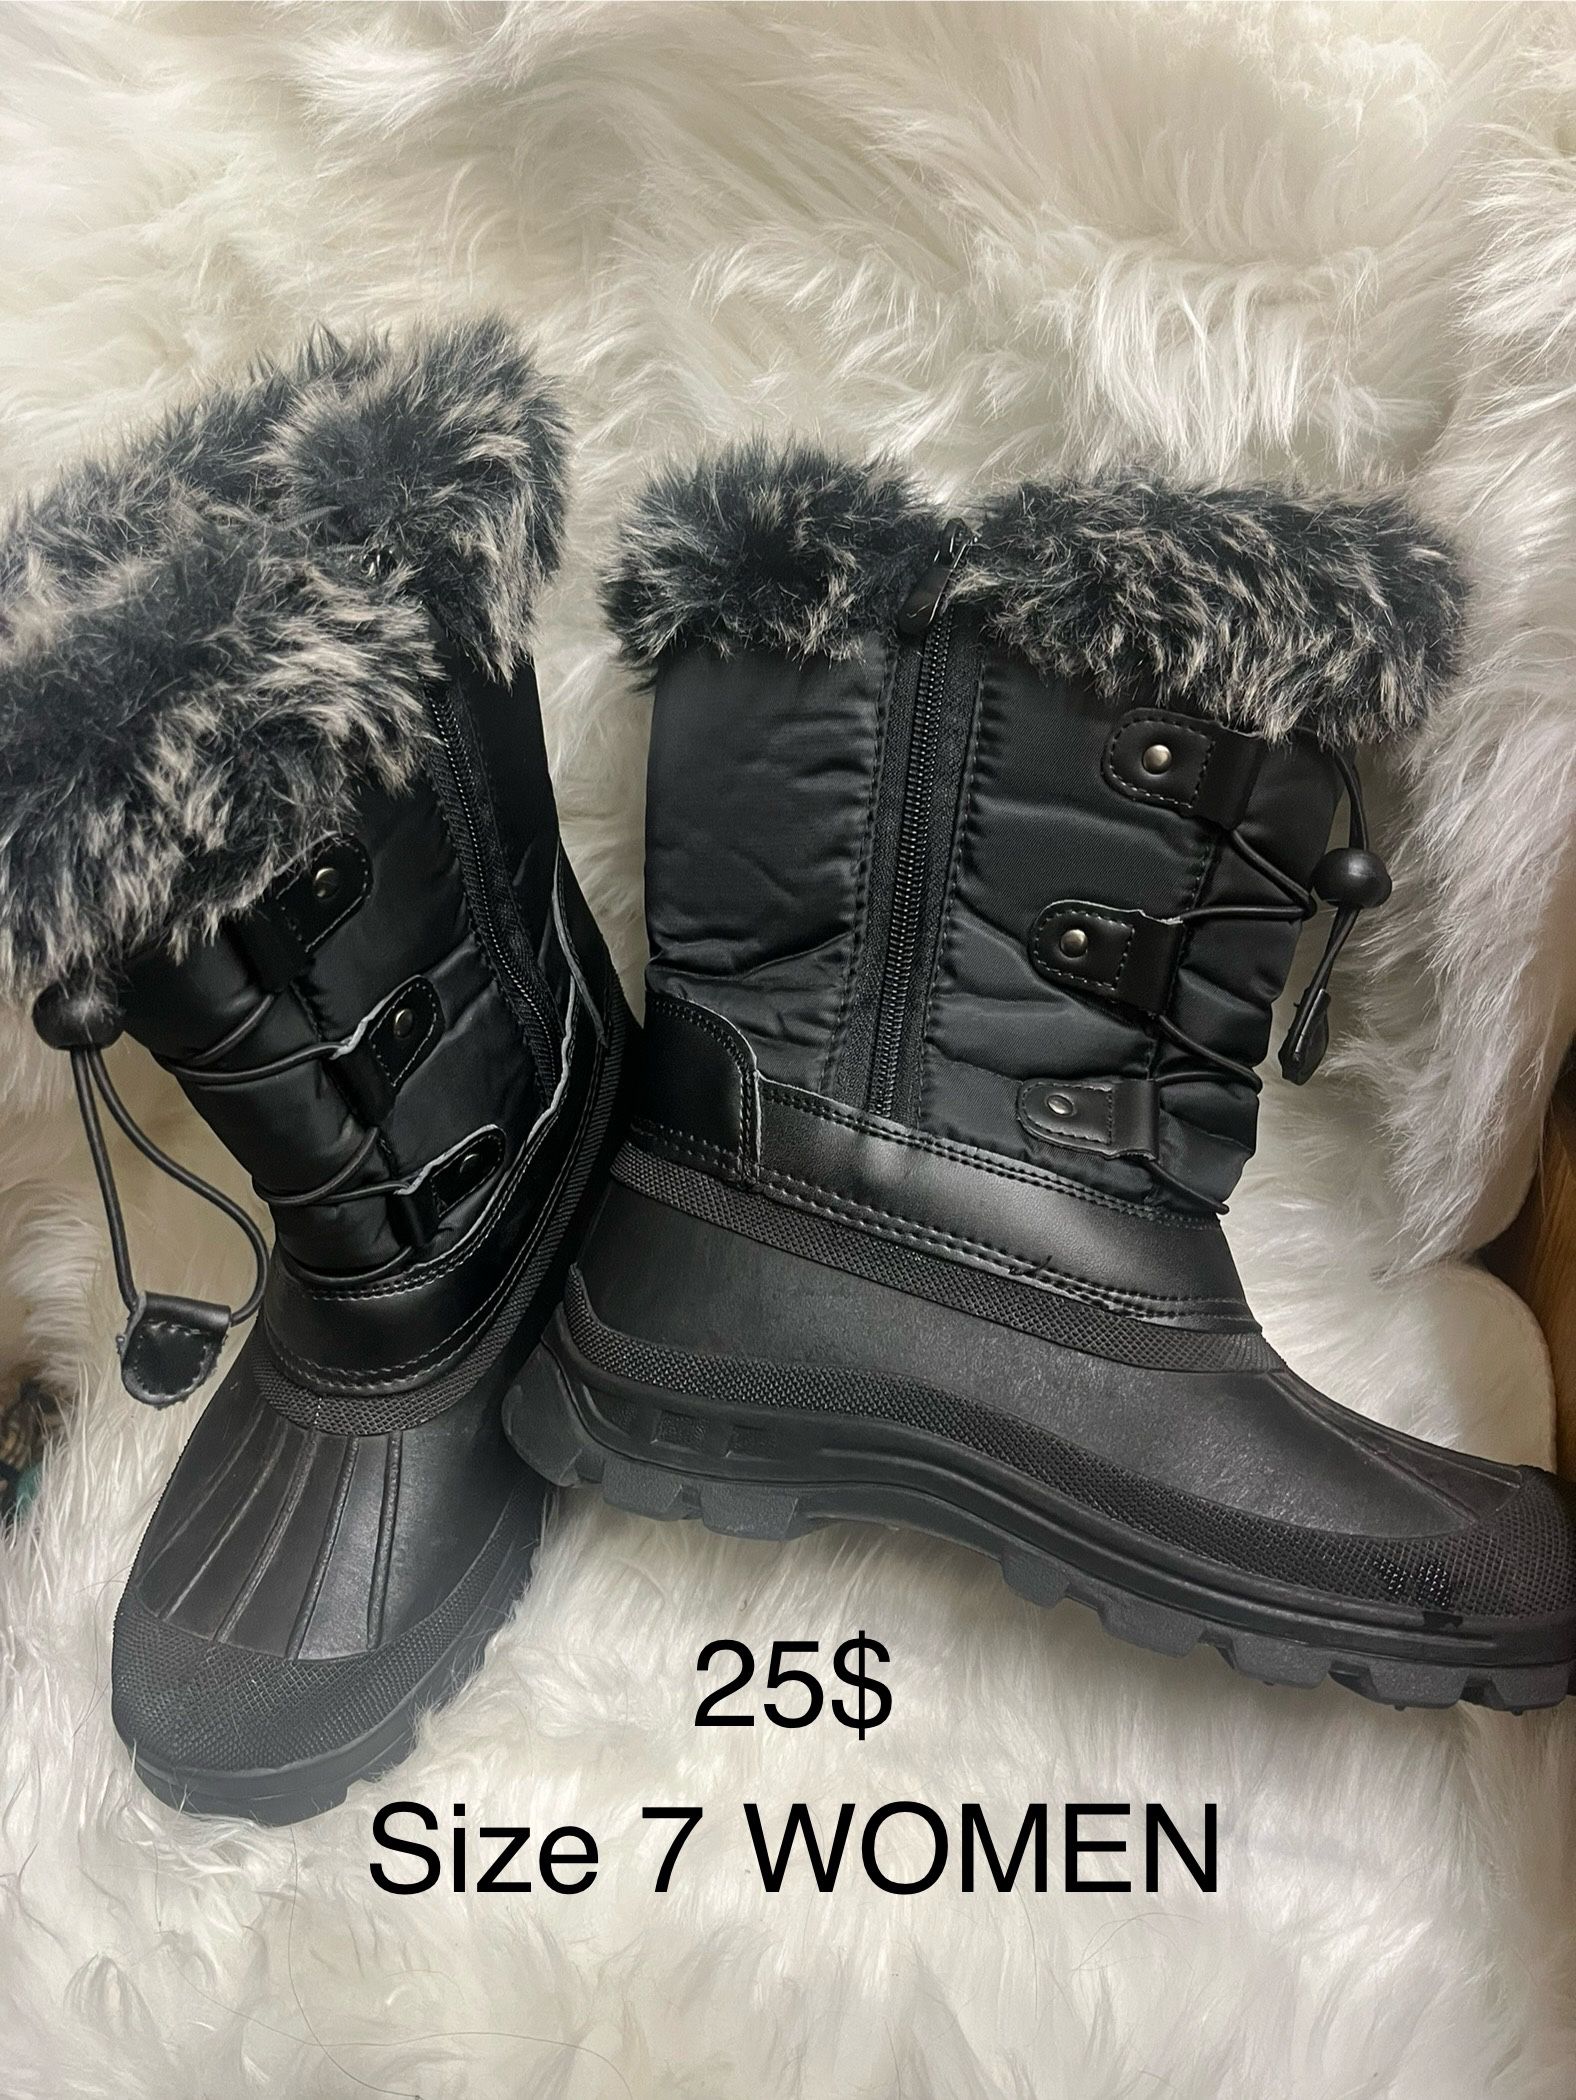 Size 7 WOMEN SNOW BOOTS 